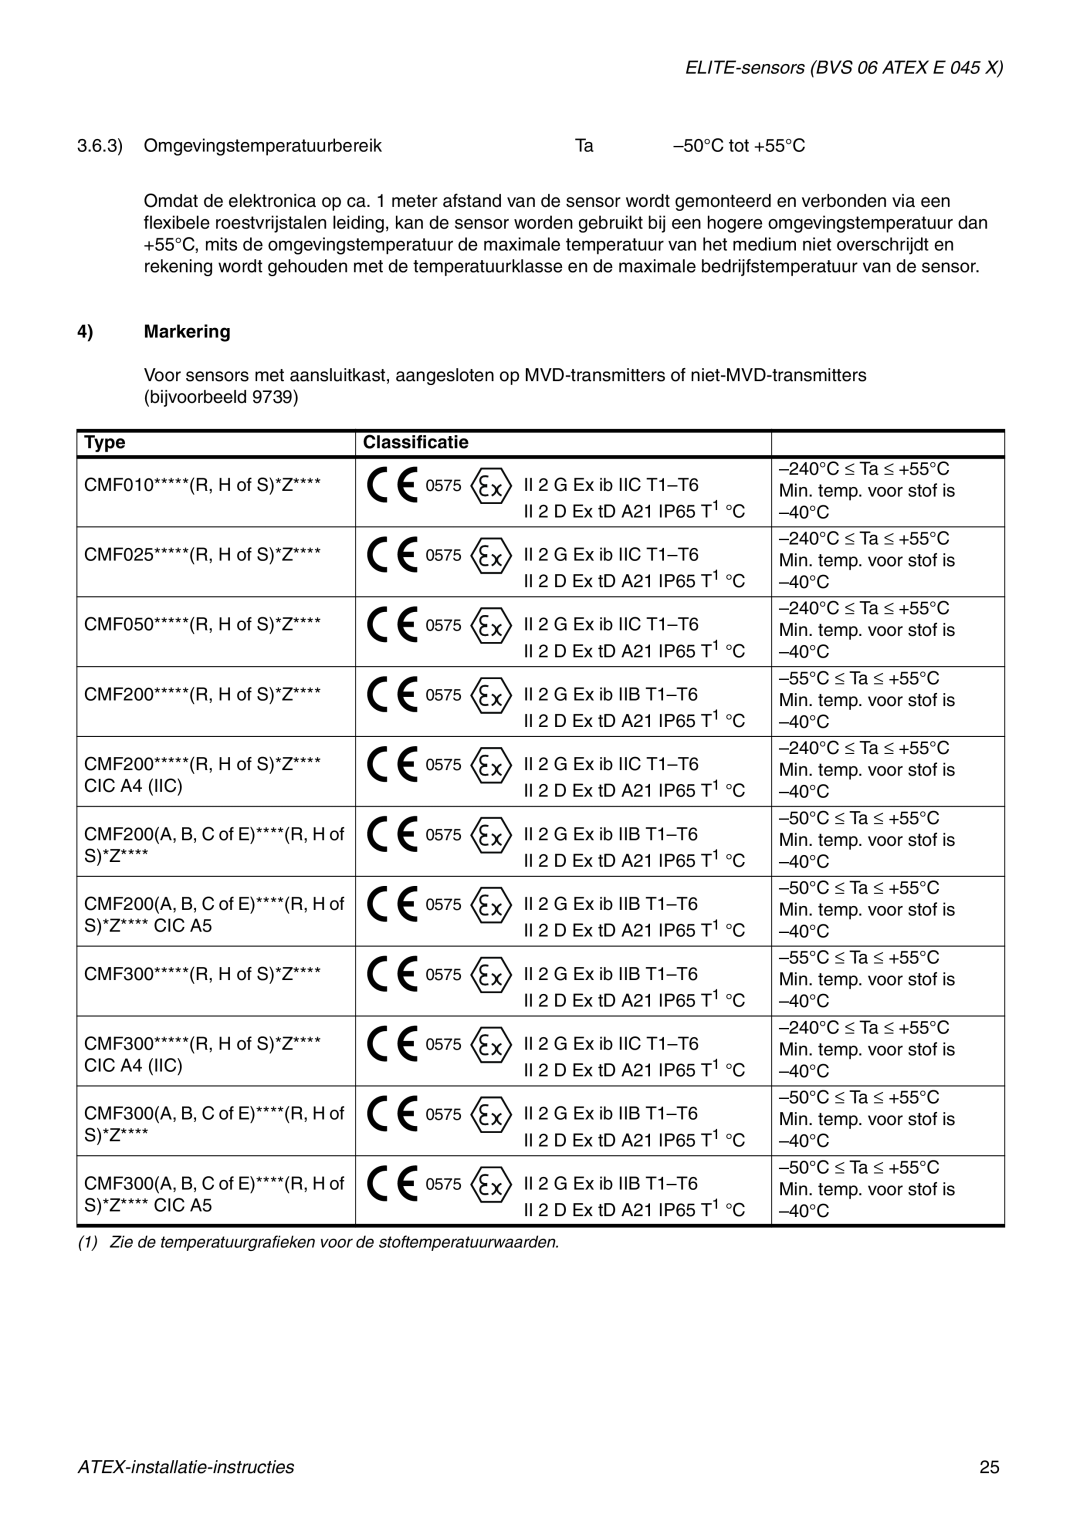 Emerson Process Management MMI-20010080 manual 4Markering, Type, Classificatie 